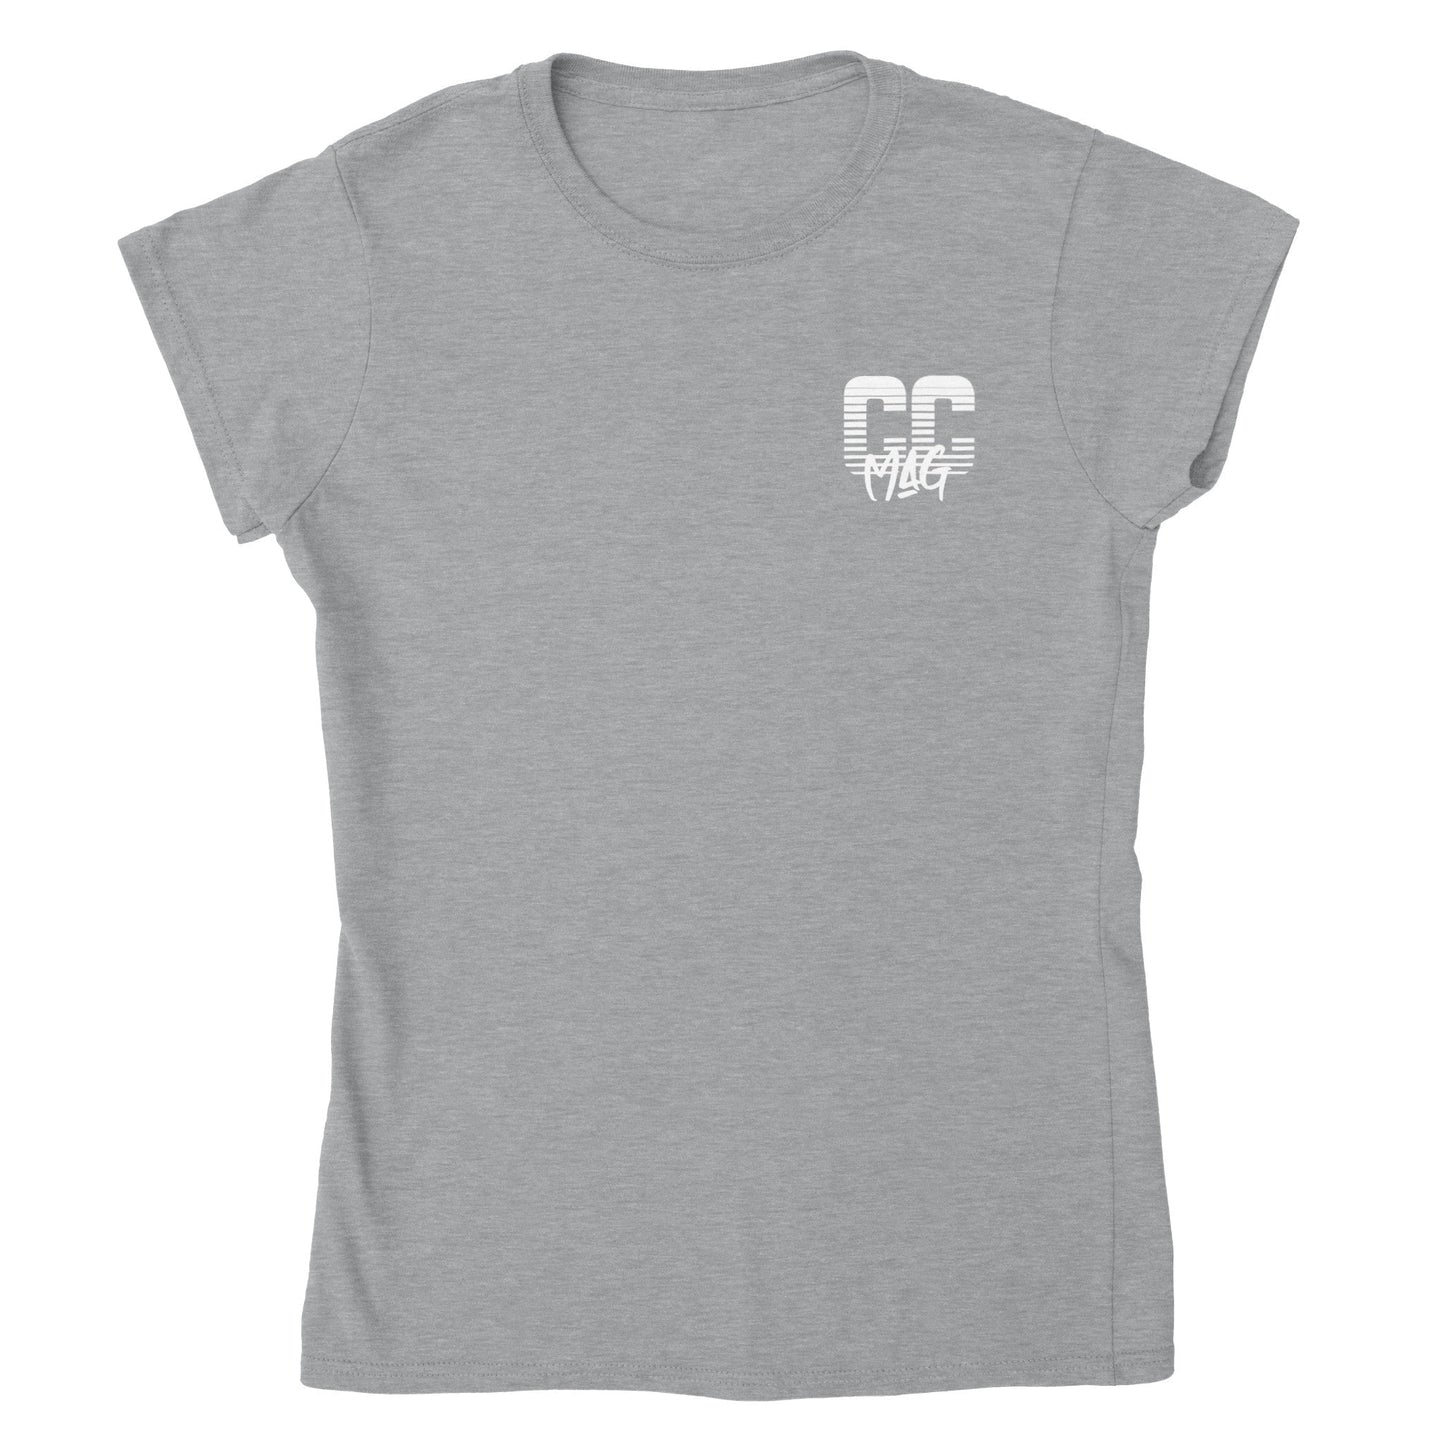 Print Material - Womens CCMAG T-shirt